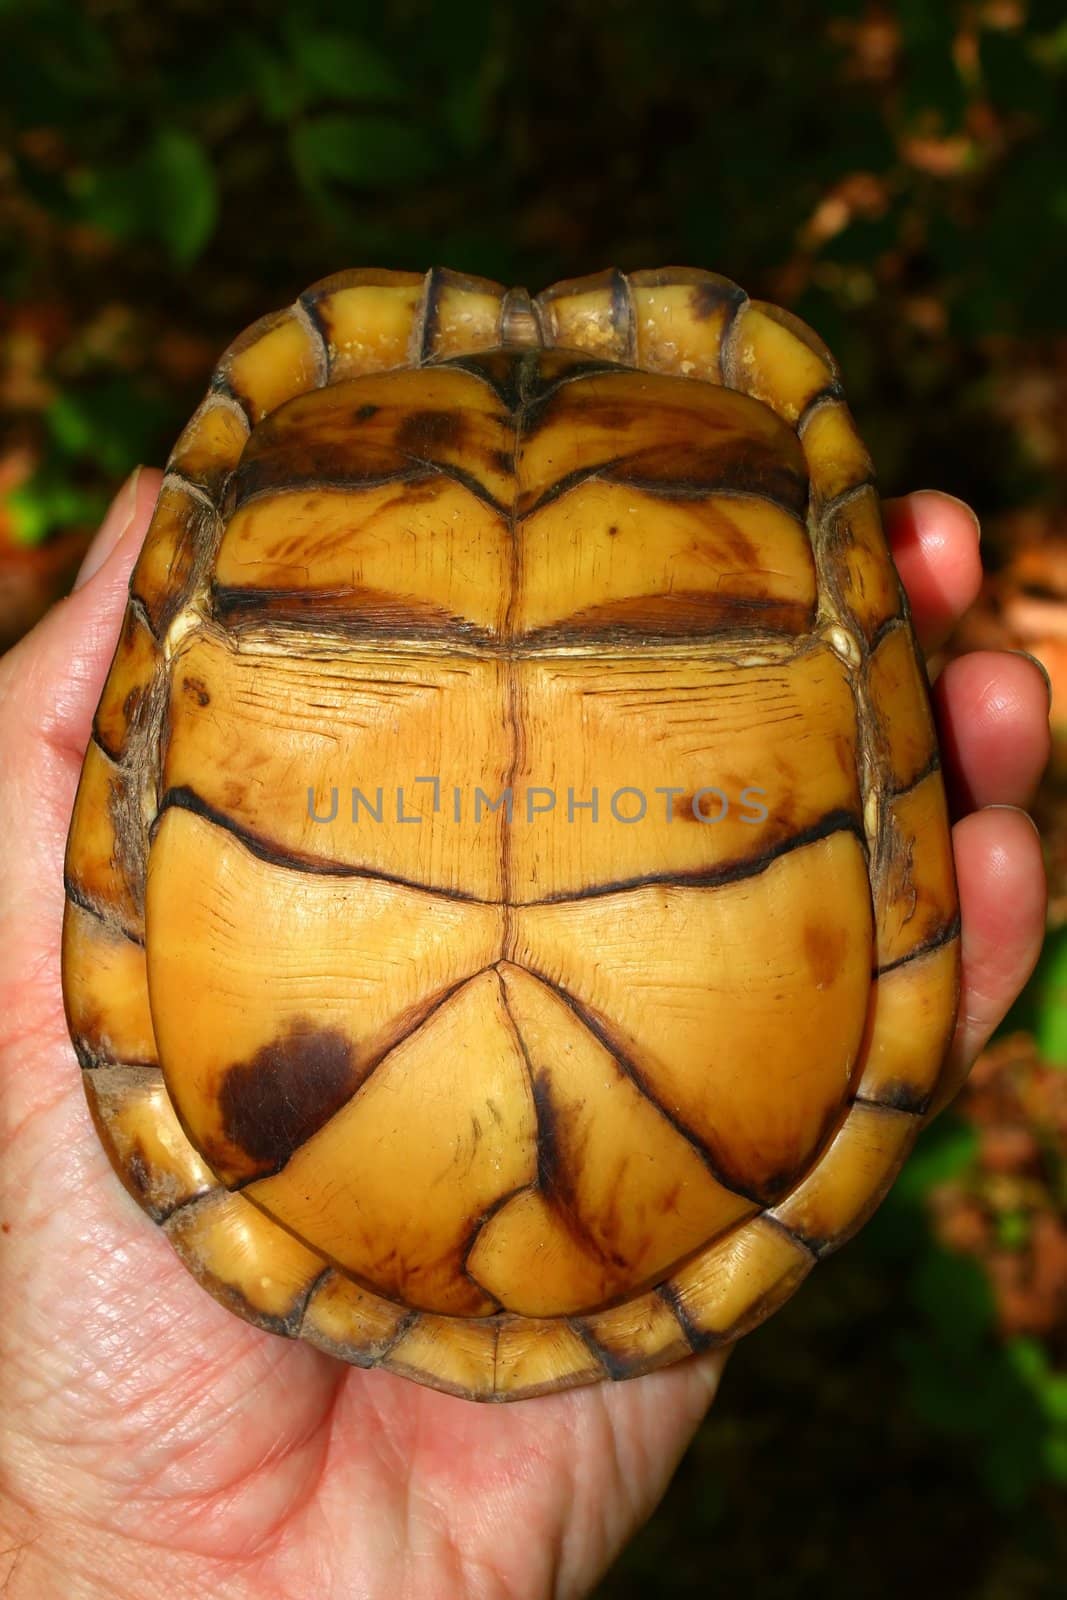 Box Turtle (Terrapene carolina) by Wirepec